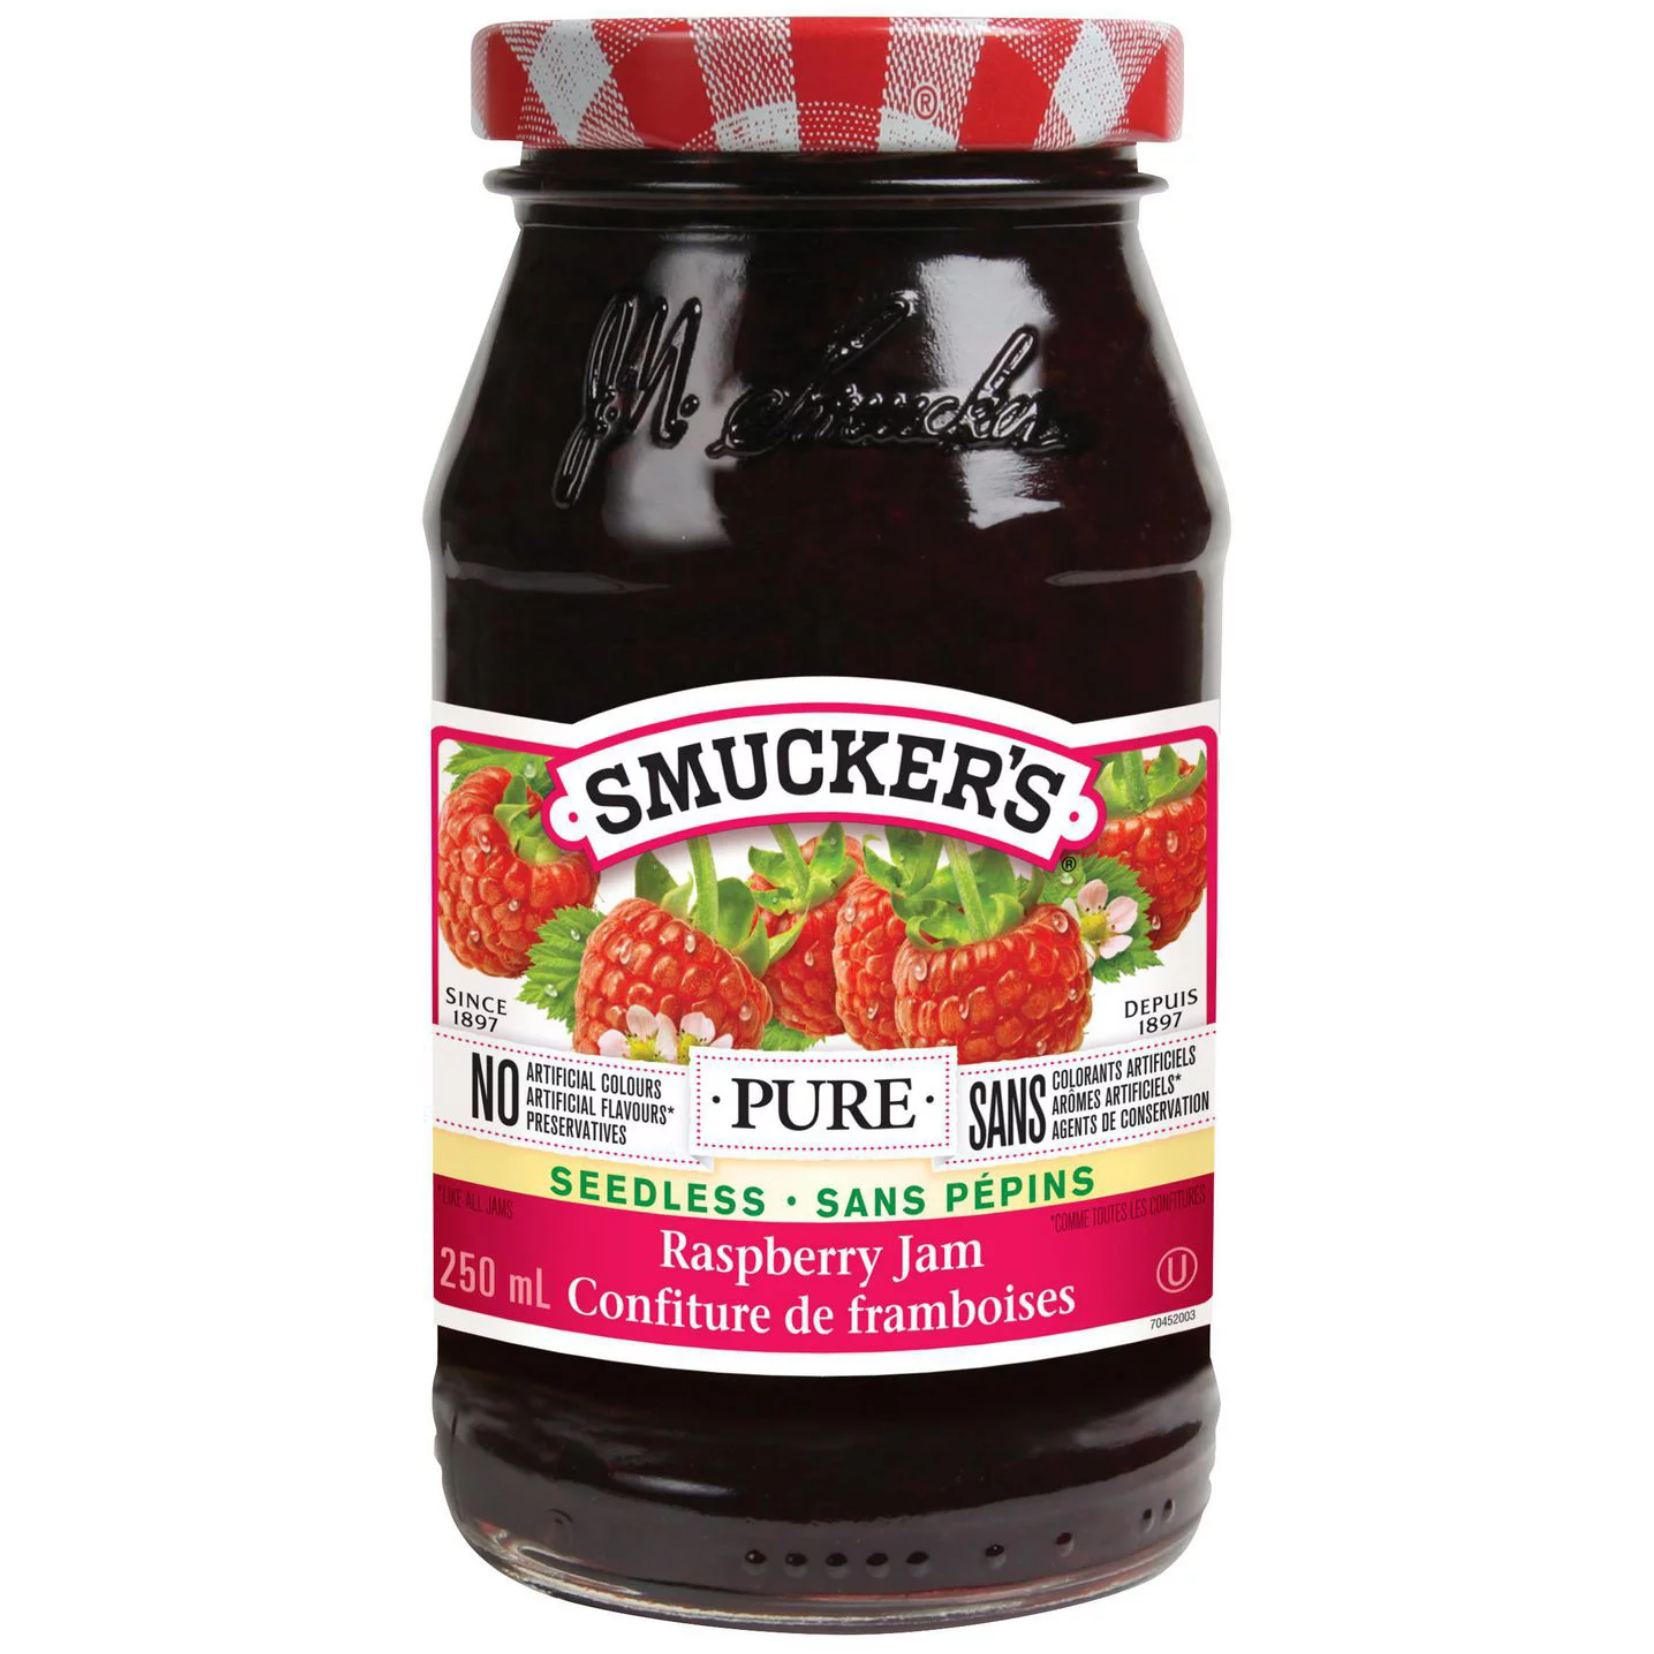 Smuckers Pure Seedless Raspberry Jam 250ml